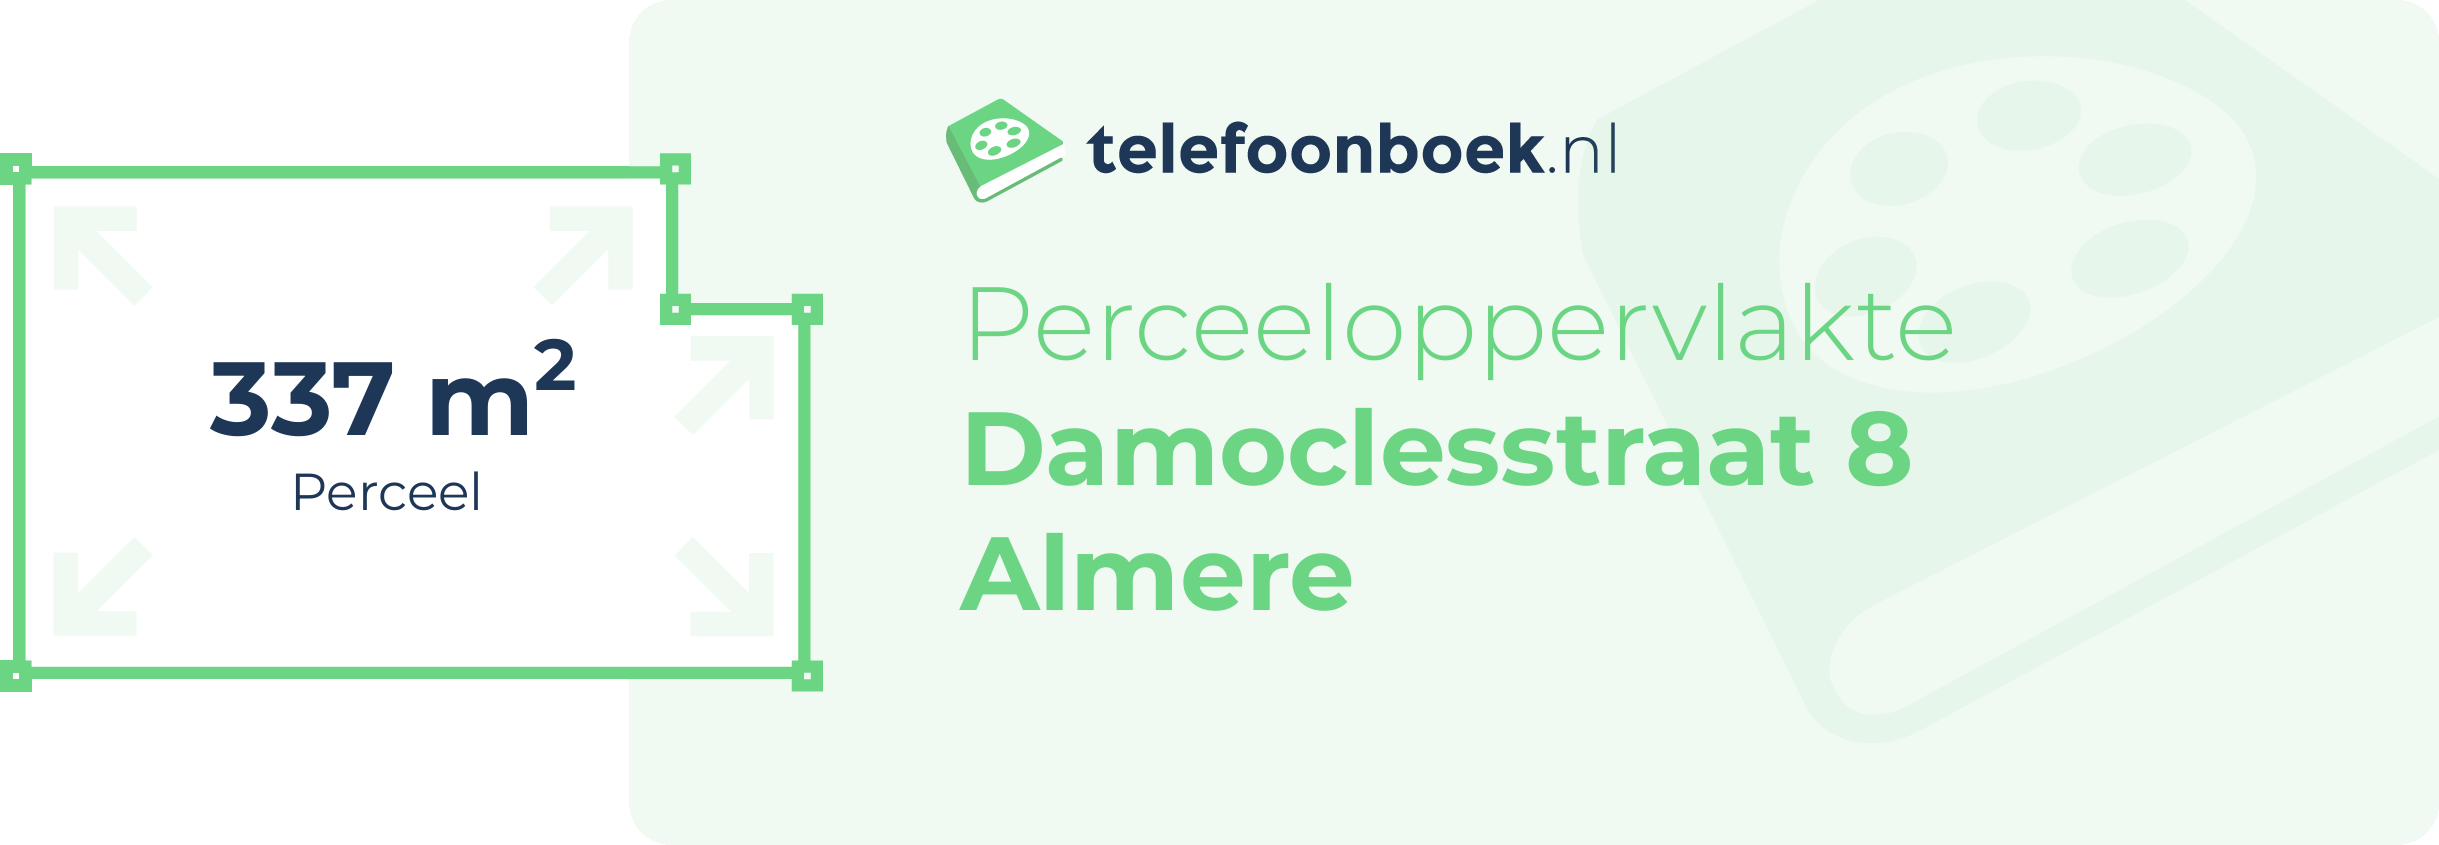 Perceeloppervlakte Damoclesstraat 8 Almere